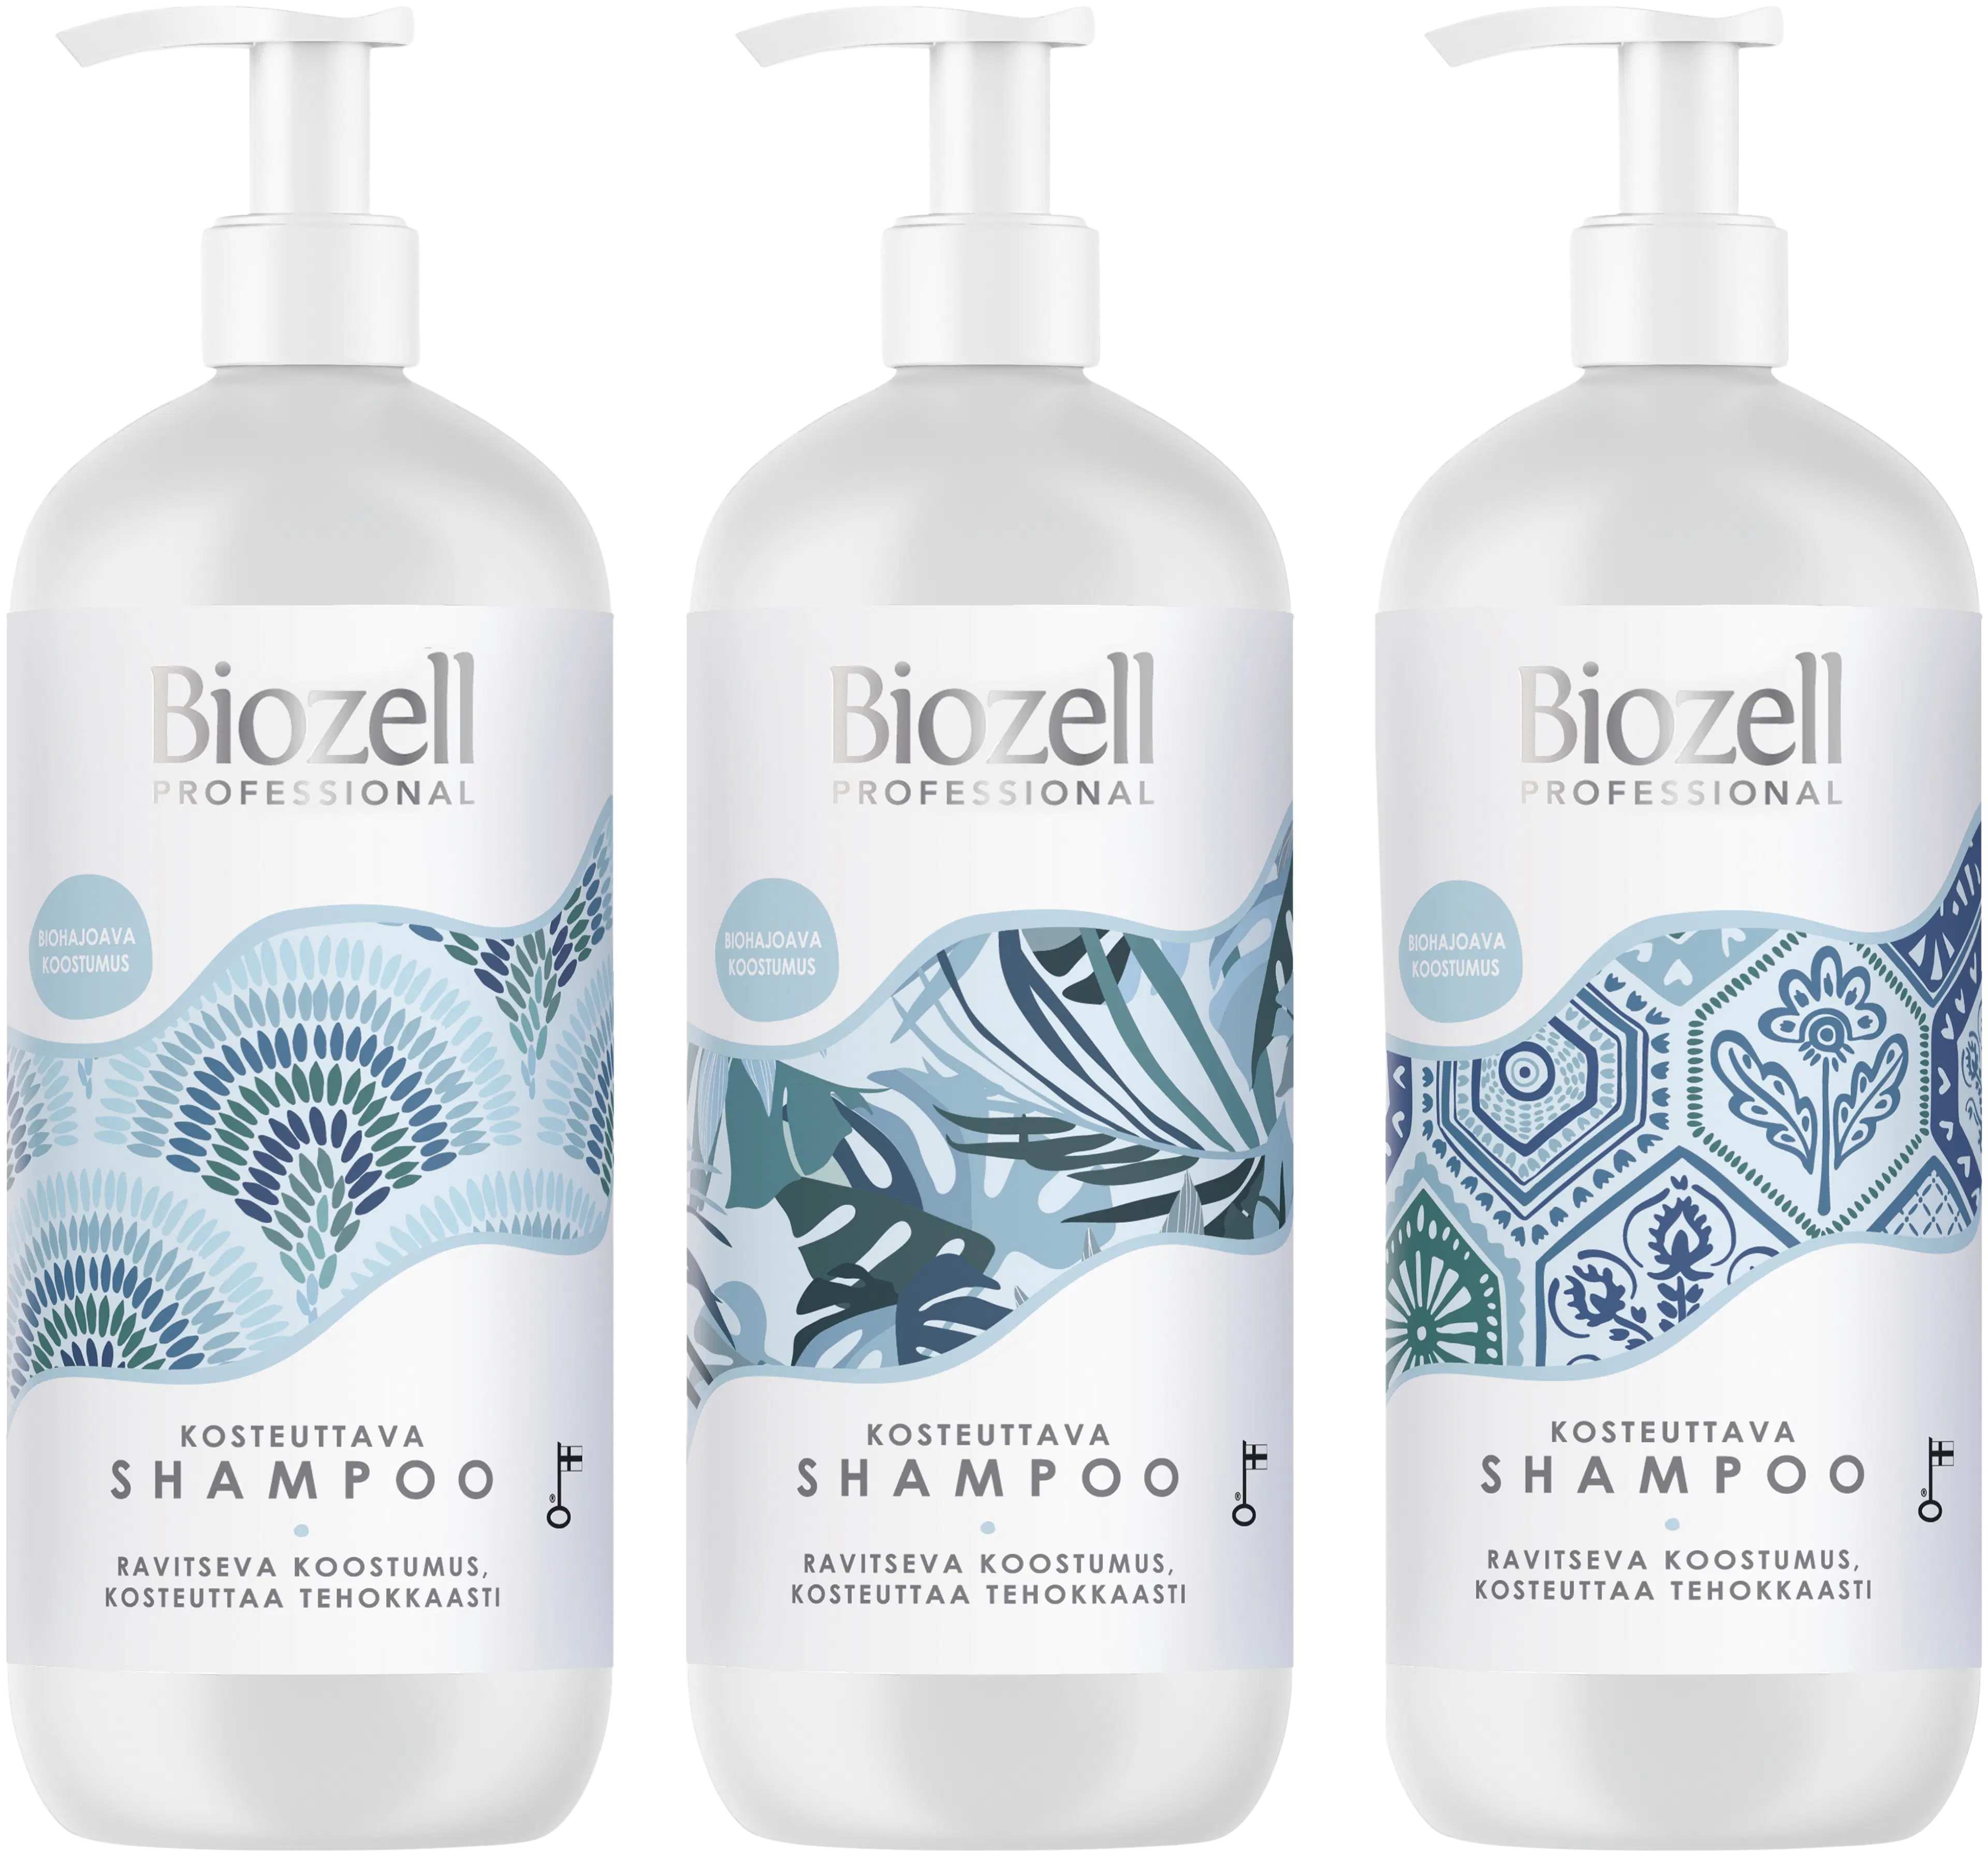 Biozell Professional Kosteuttava shampoo 500ml